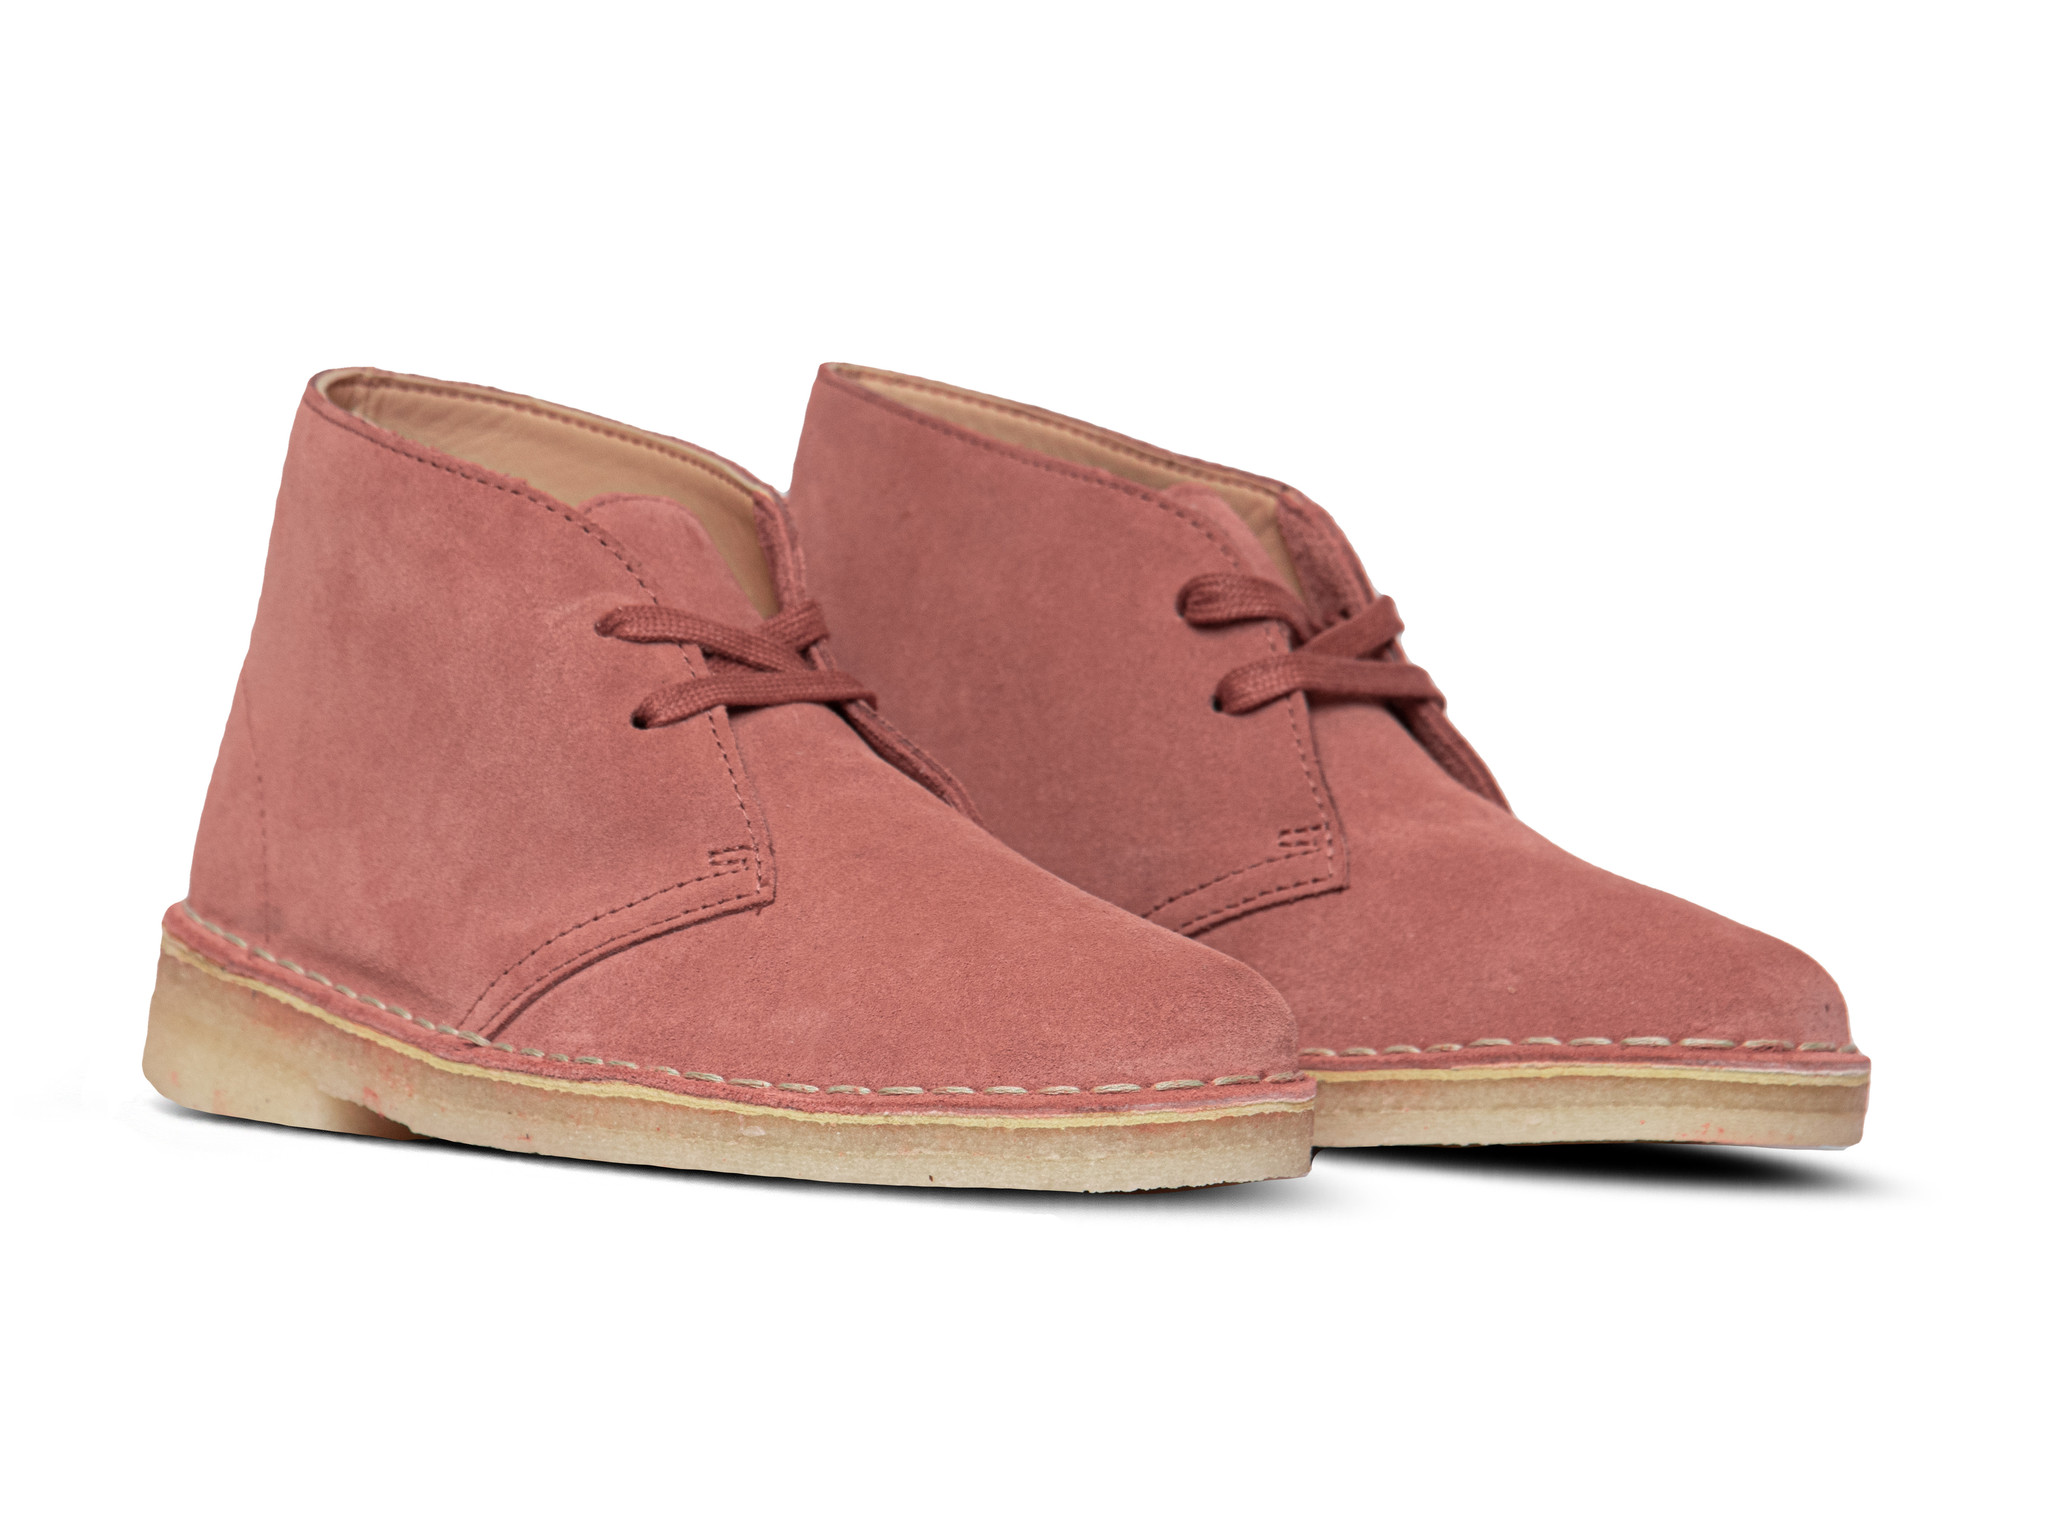 Clarks Originals Desert Boot Dark Blush Suede 2615668 | Bruut Online - Sneakers & Clothing Store